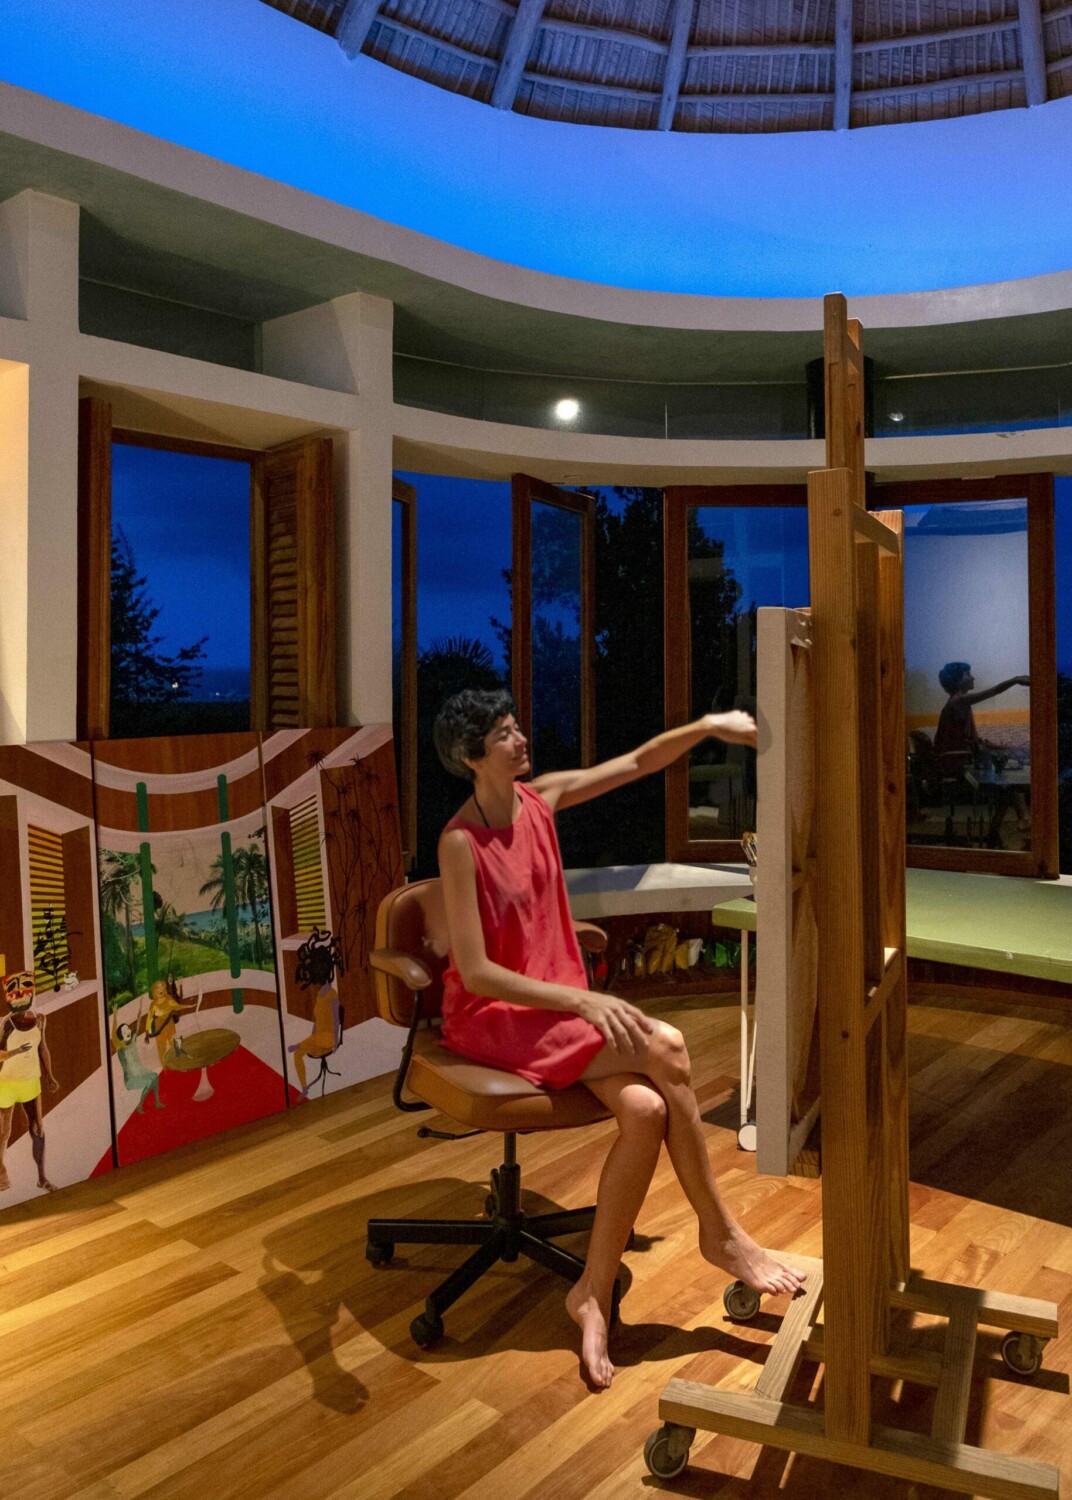 Hulda Guzmán in her studio. Lanza del Norte, Samaná, 2021. Photo by Eddy Guzmán